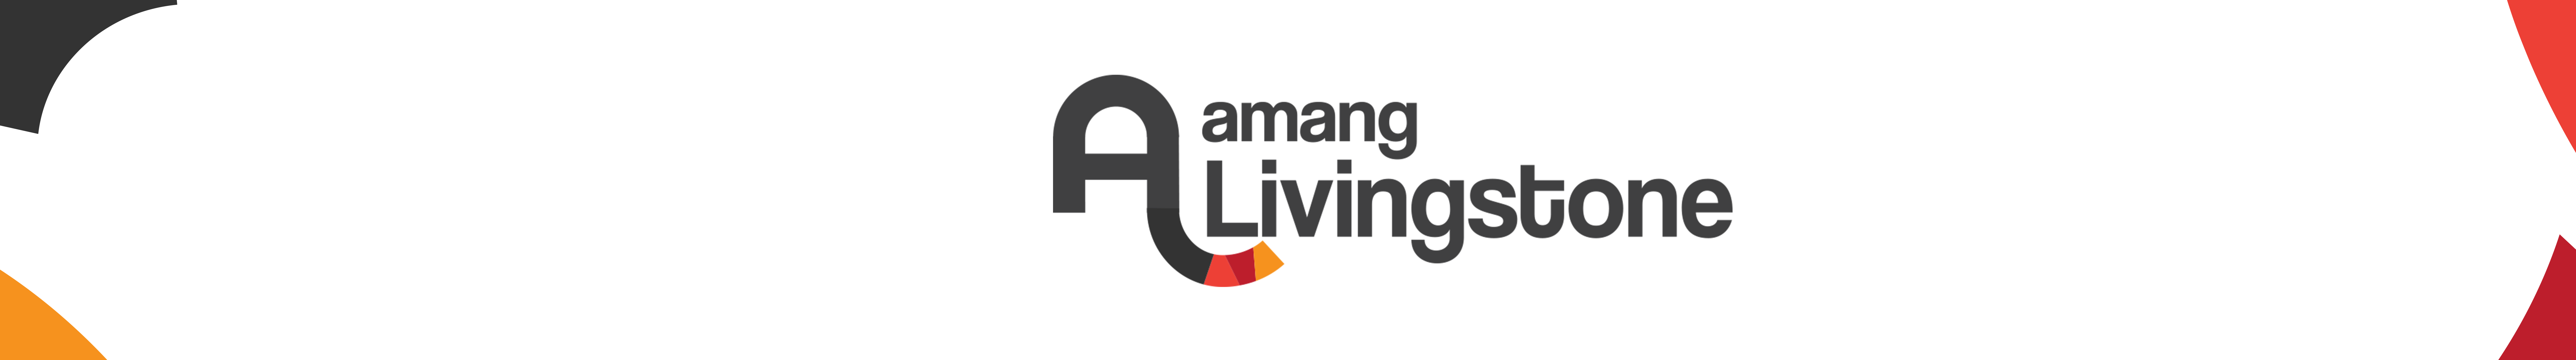 Amang Livingstone's profile banner